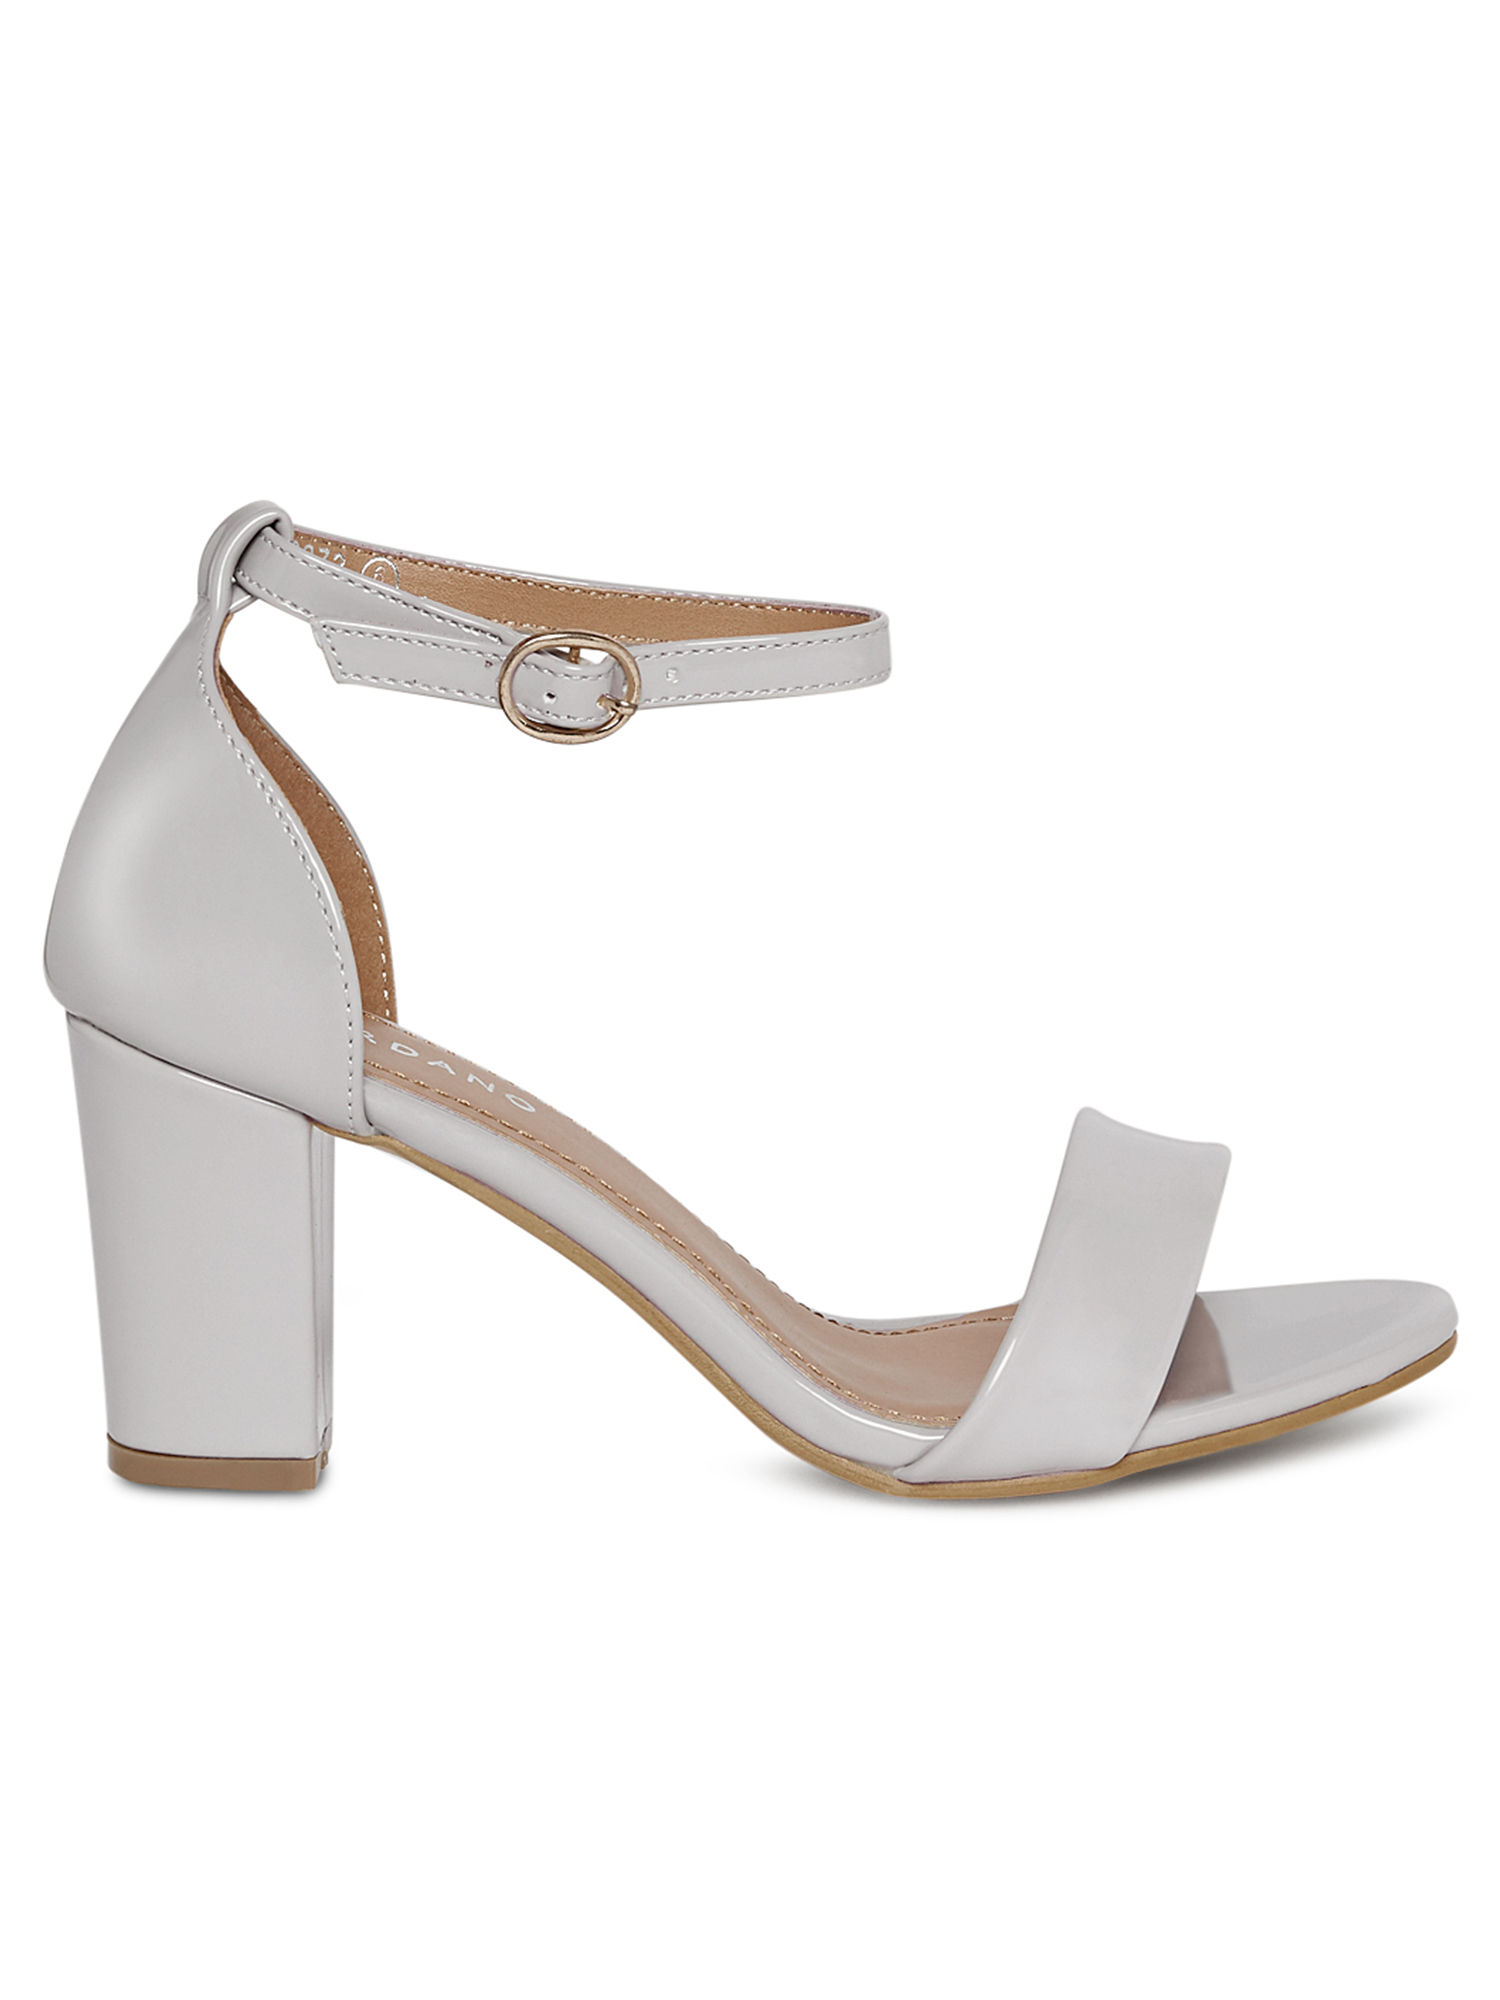 grey sandal block heel